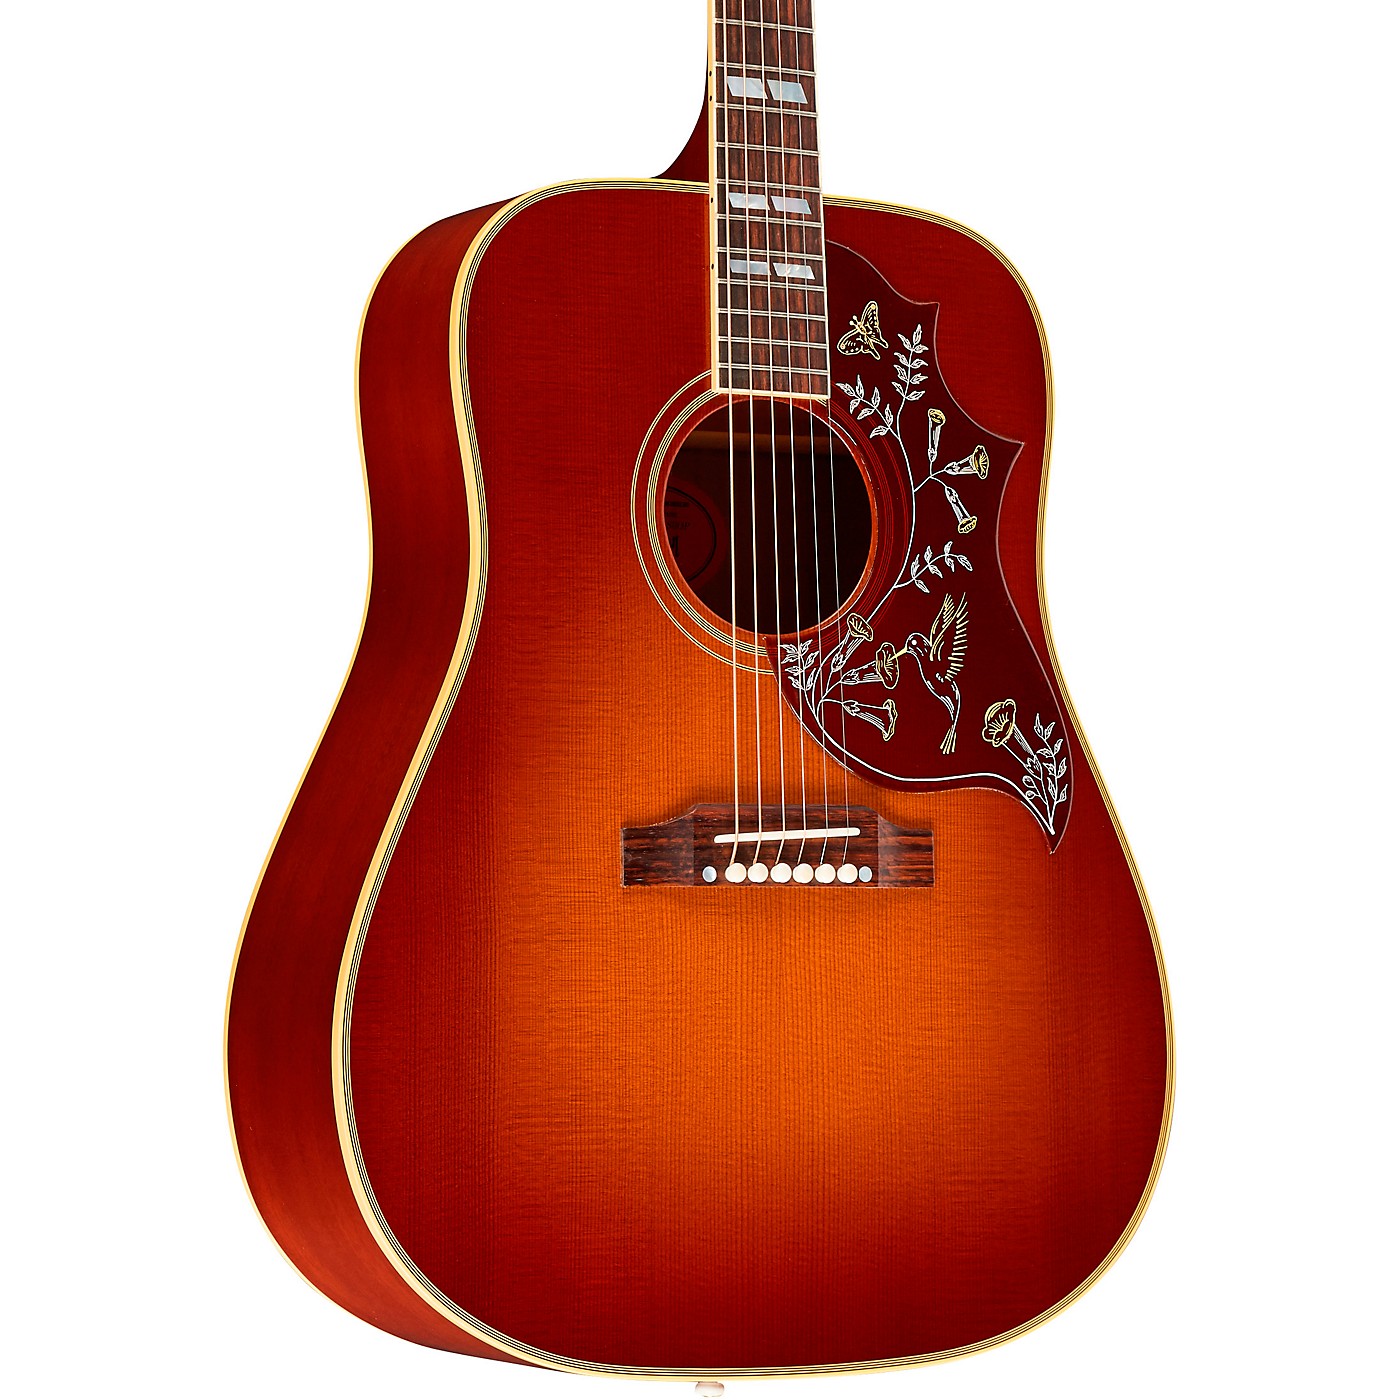 Gibson 1960 Hummingbird with Fixed Bridge Acoustic Guitar thumbnail